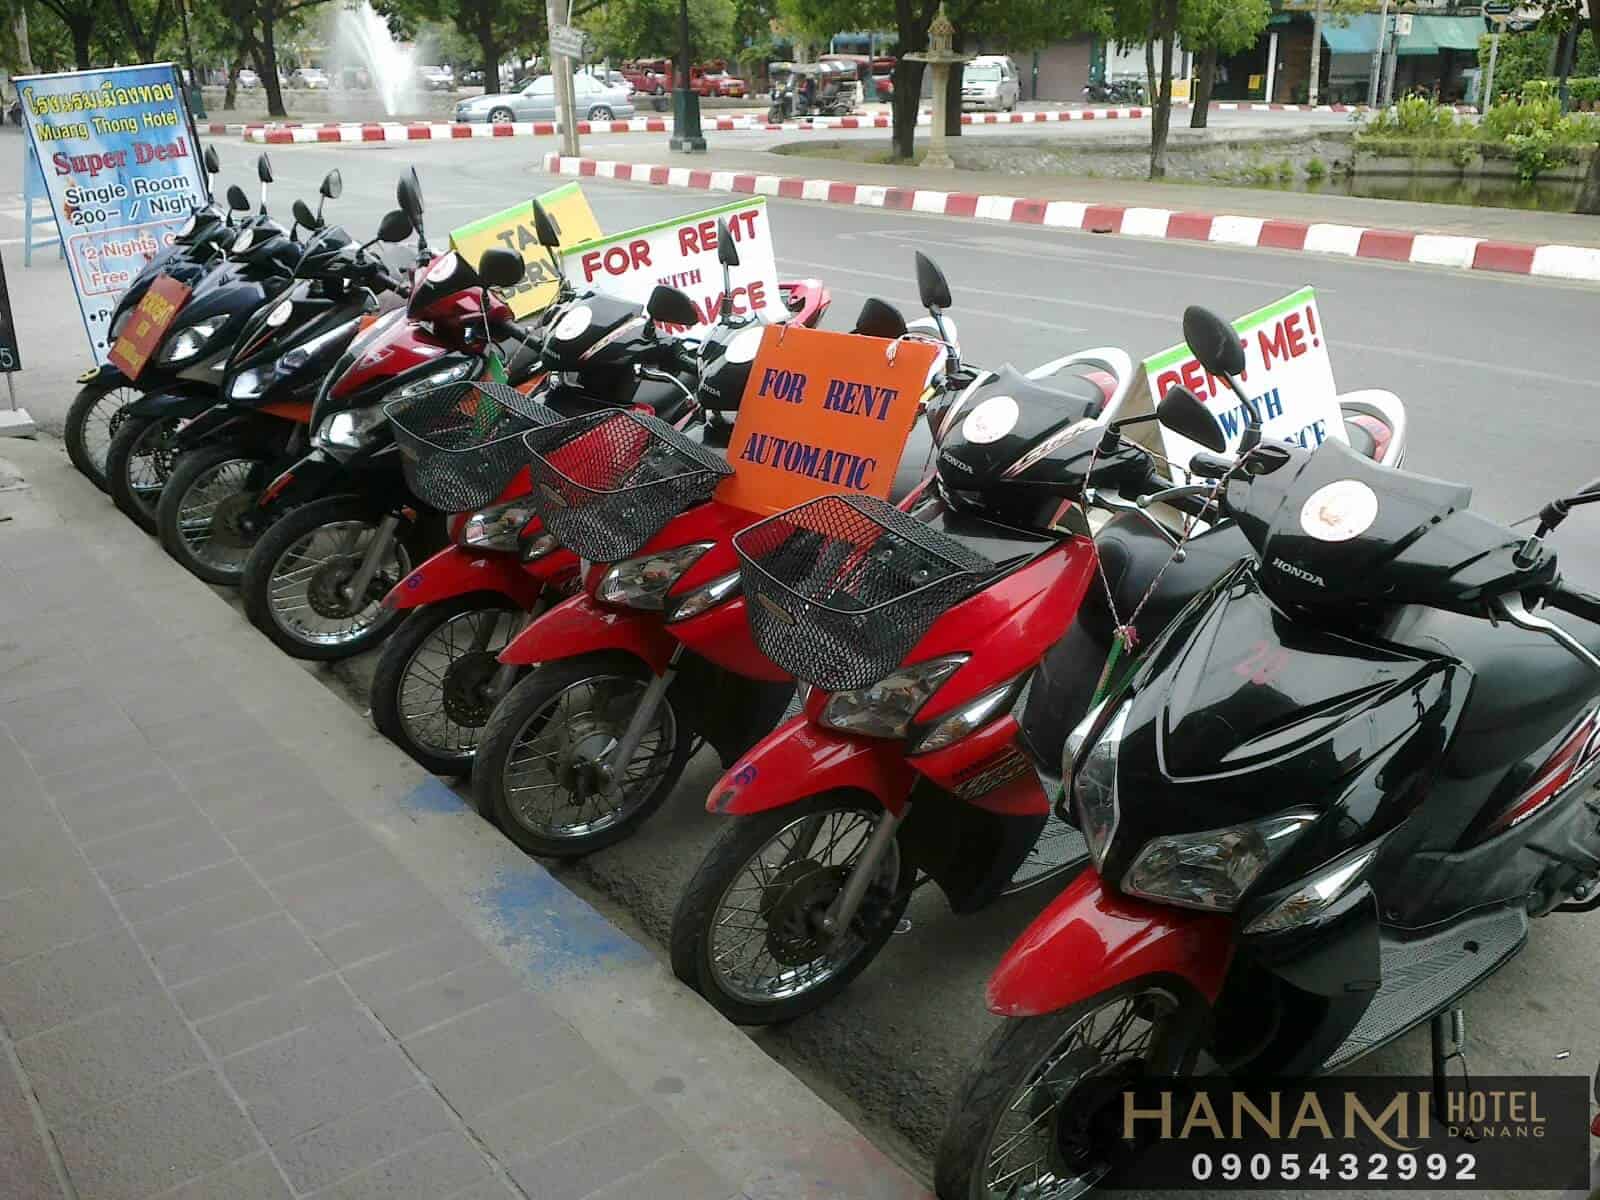 best motorbike rentals in Da Nang